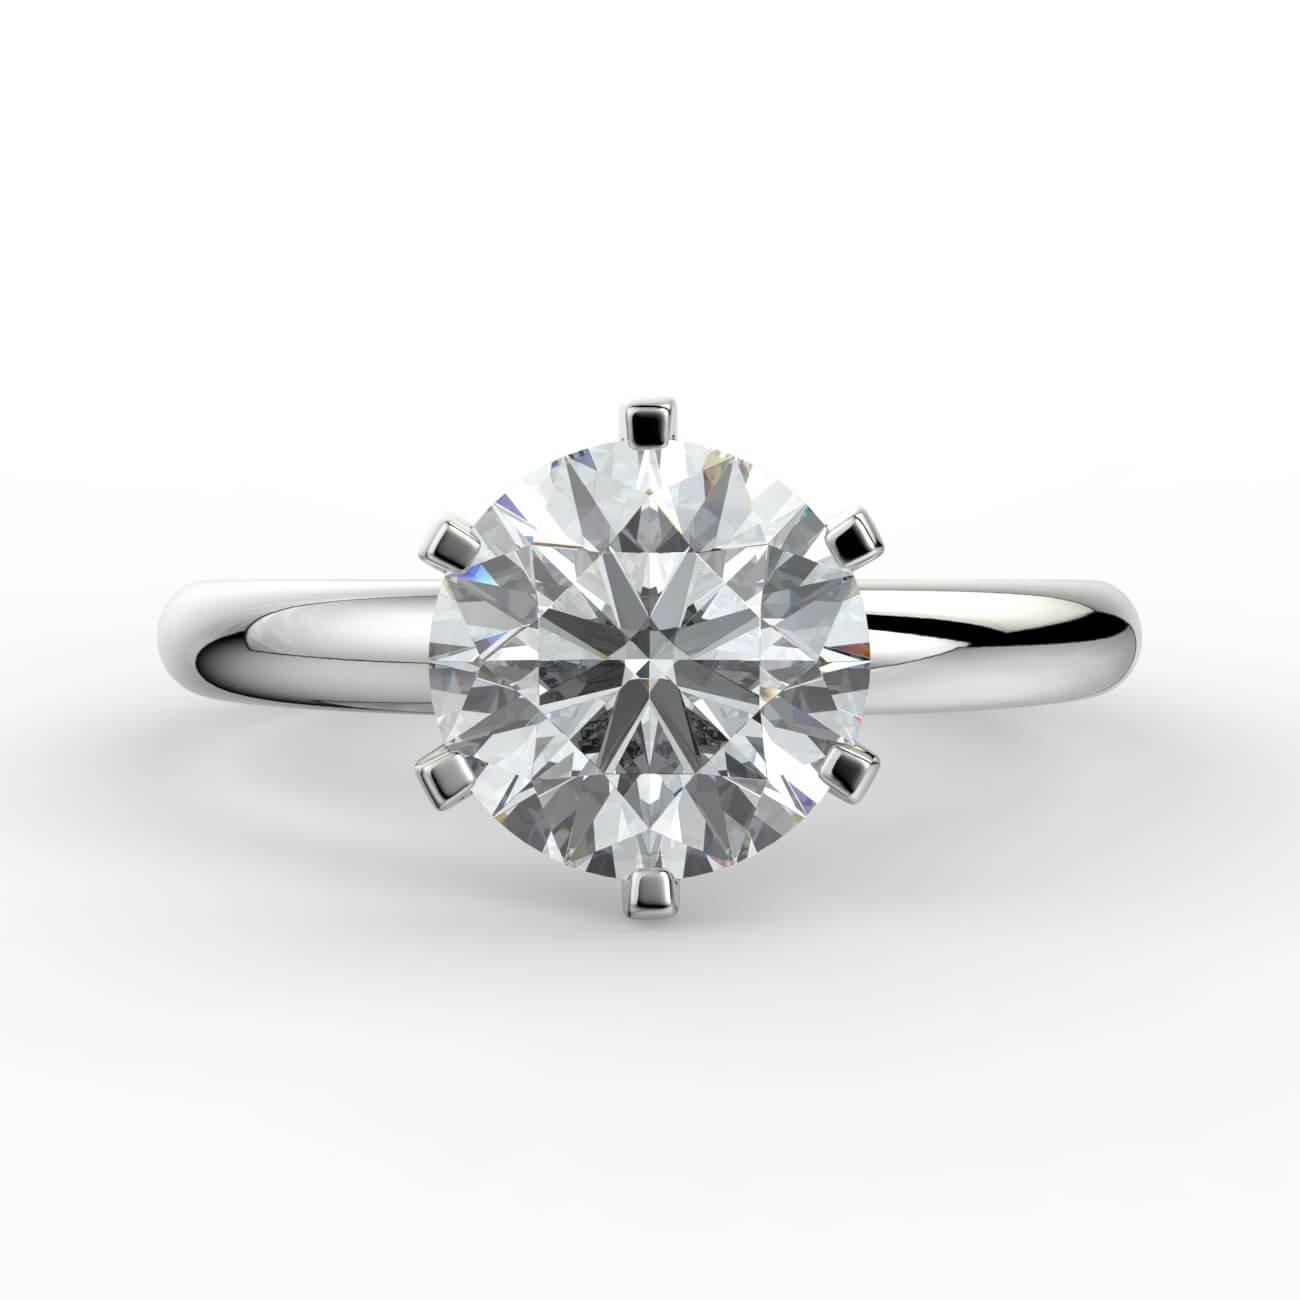 Comfort fit 6 claw solitaire diamond ring in platinum – Australian Diamond Network